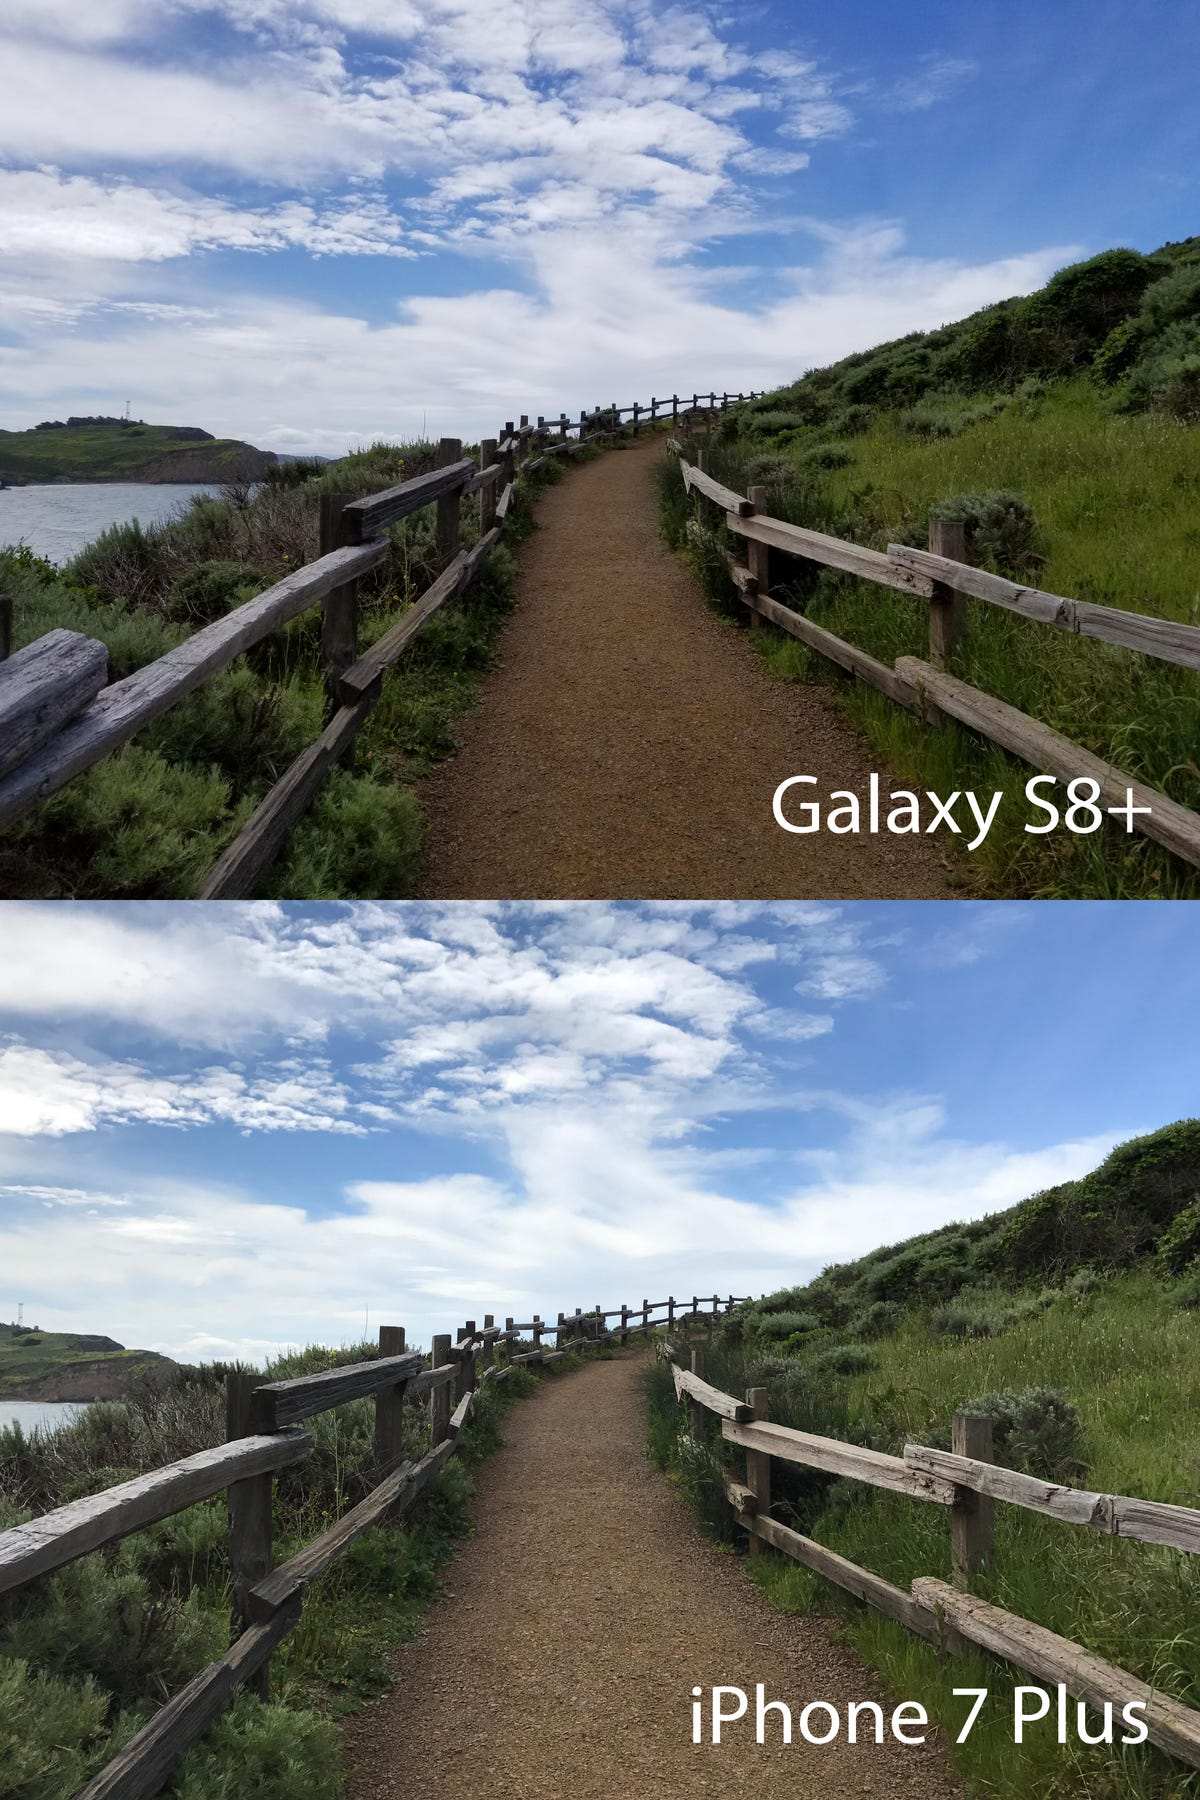 cangrejo Vislumbrar Recurso Galaxy S8 vs iPhone 7: Which camera is better? - CNET